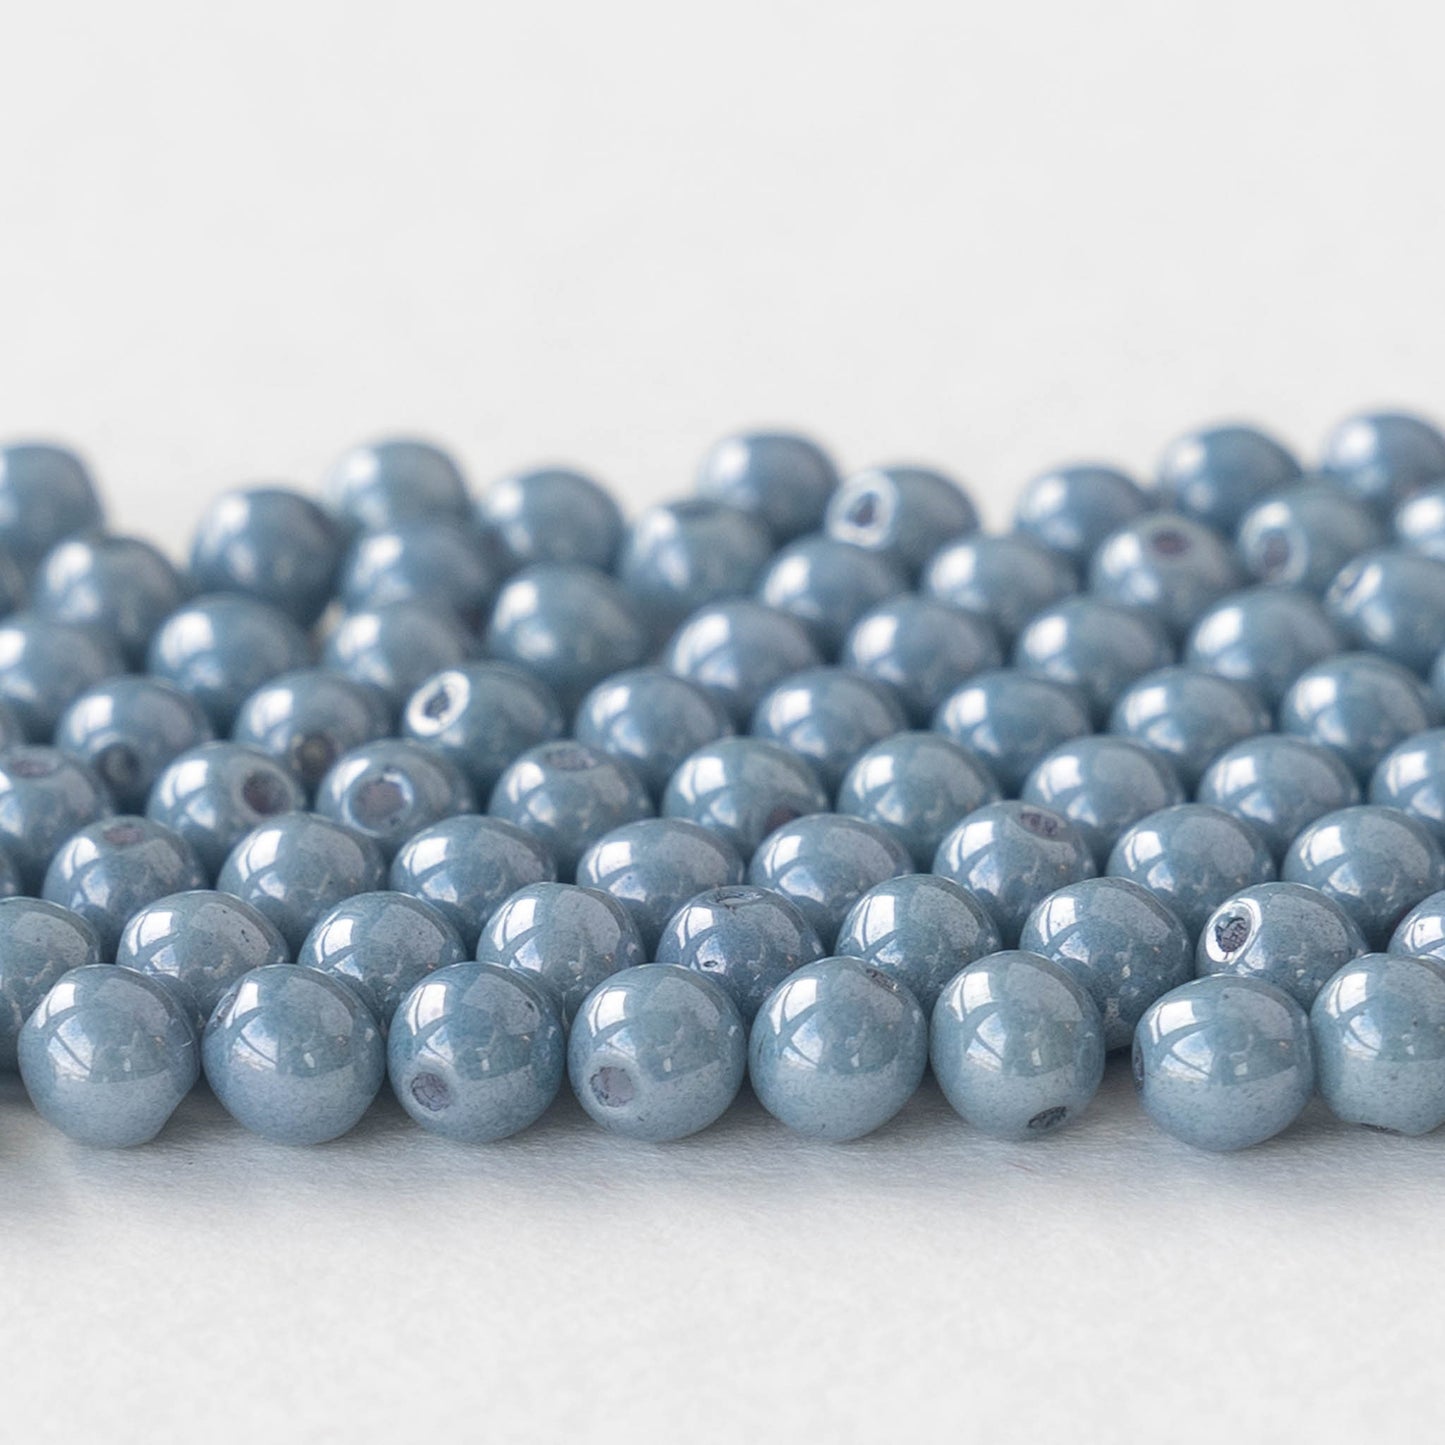 4mm Round Glass Beads - Light Blue Luster - 100 Beads